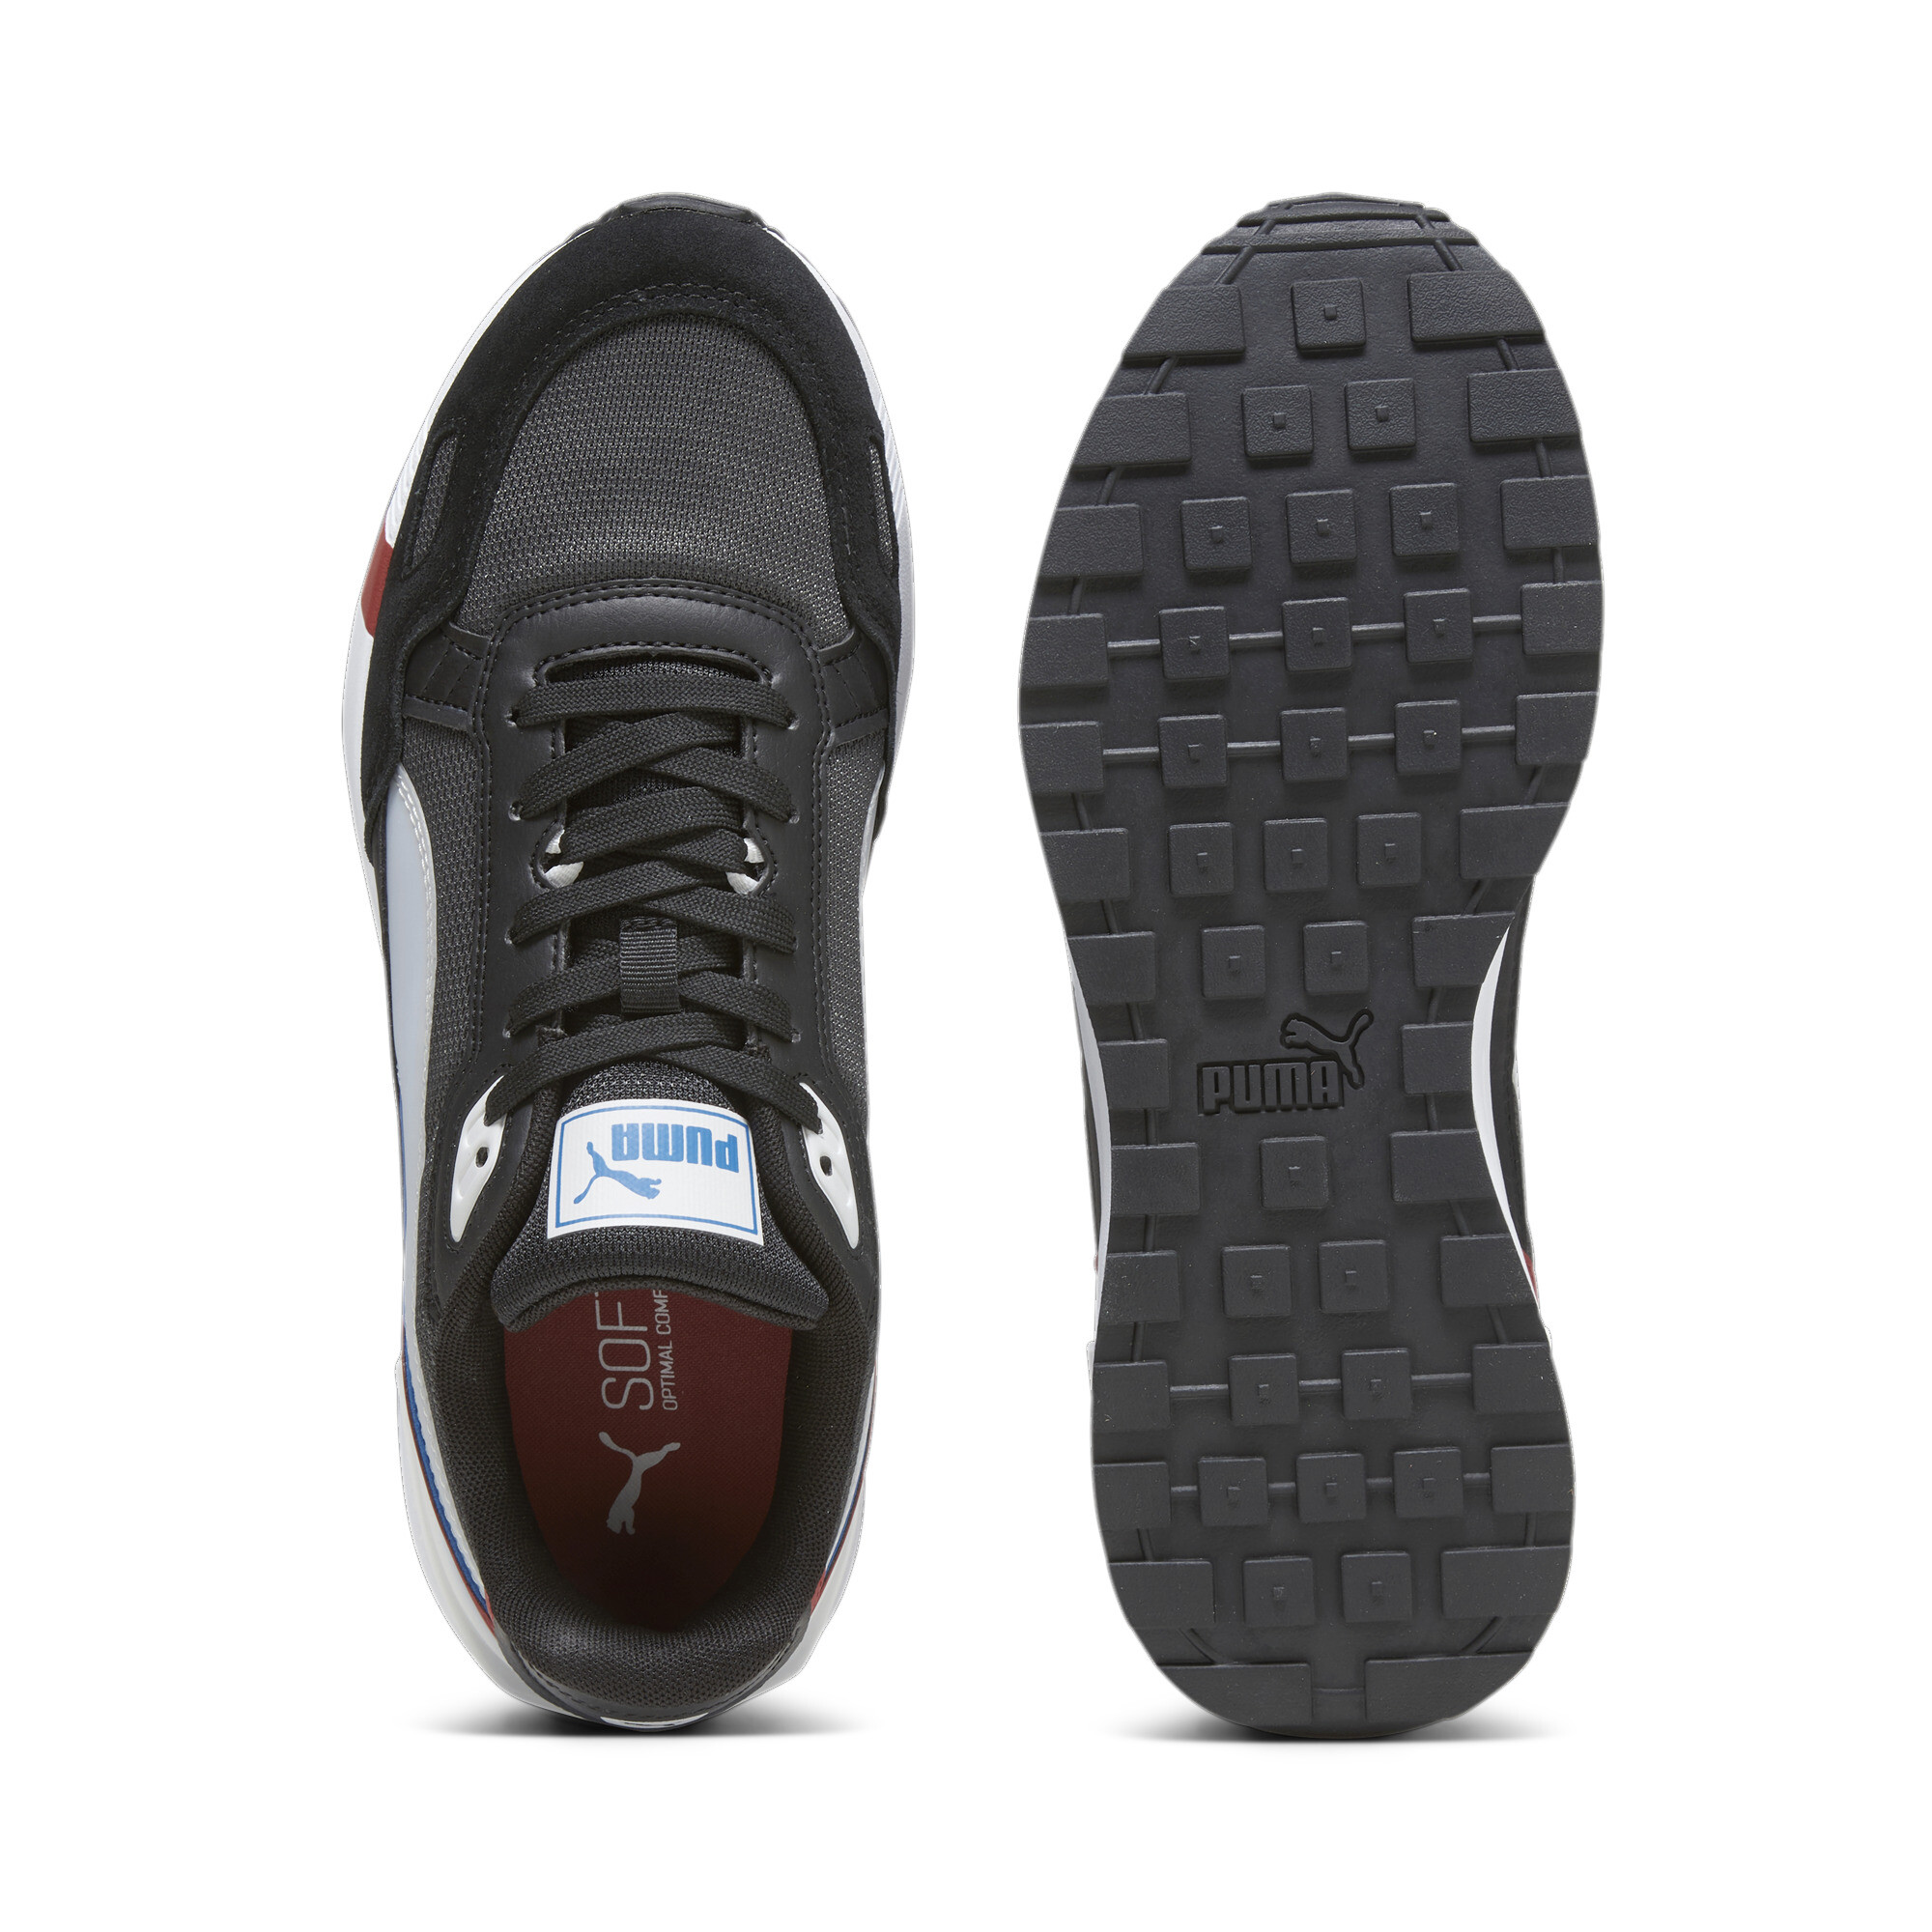 Men's PUMA Graviton Tera Trainers Shoes In Black, Size EU 44.5